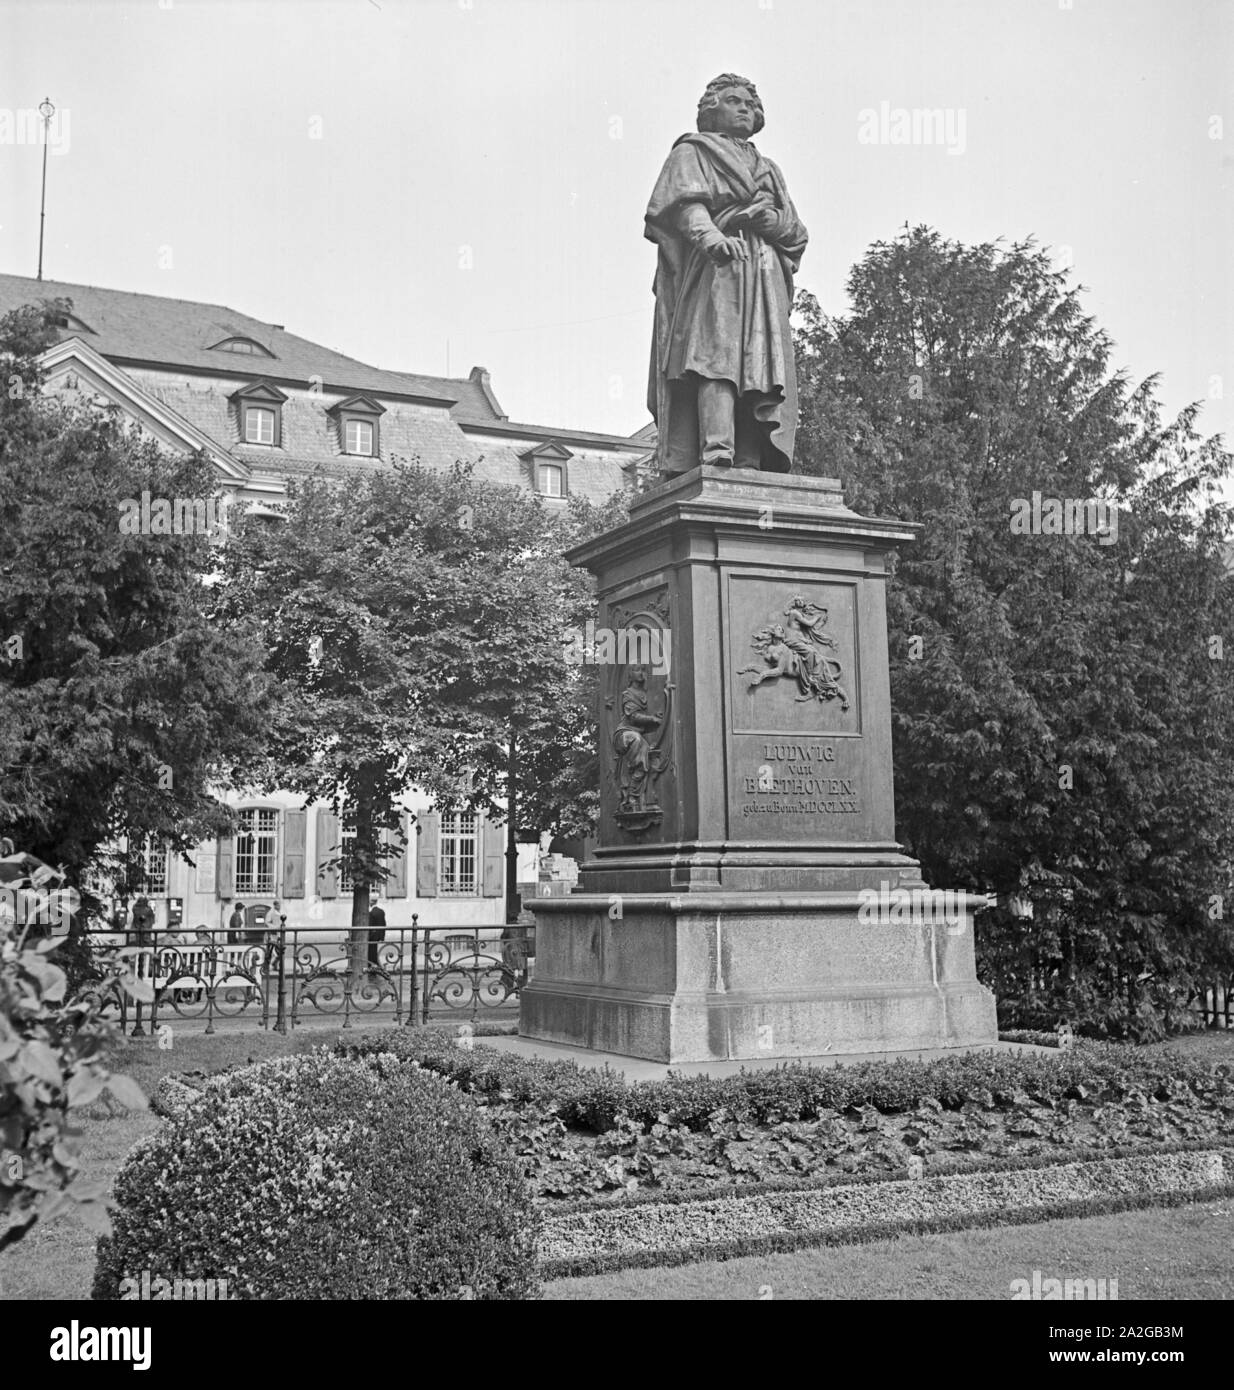 Das Beethoven Denkmal im Stadtkern von Bonn, Deutschland 1930er Jahre. Beethoven un monumento al centro della città di Bonn, Germania 1930s. Foto Stock